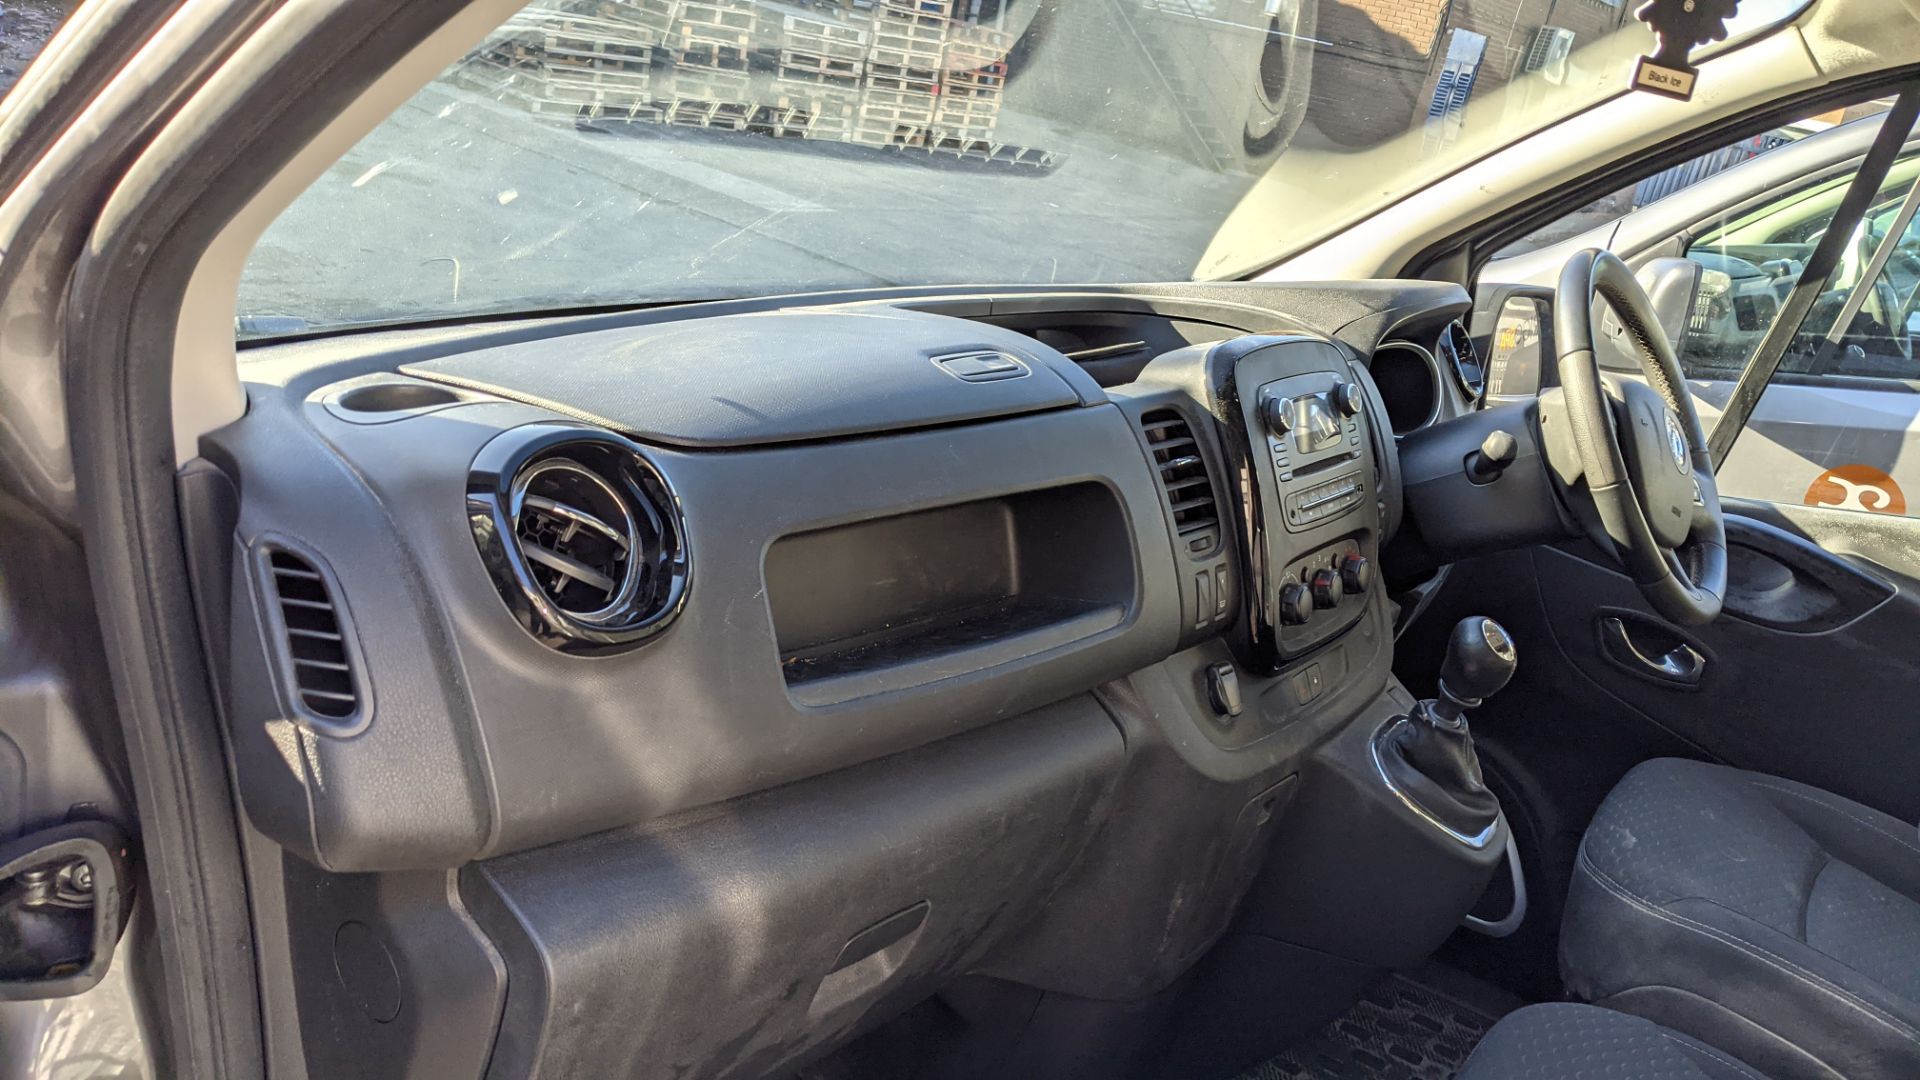 2019 Vauxhall Vivaro L2 2900 Sport CDTI BT SS panel van (Registration FD19 YUB) - Image 45 of 55